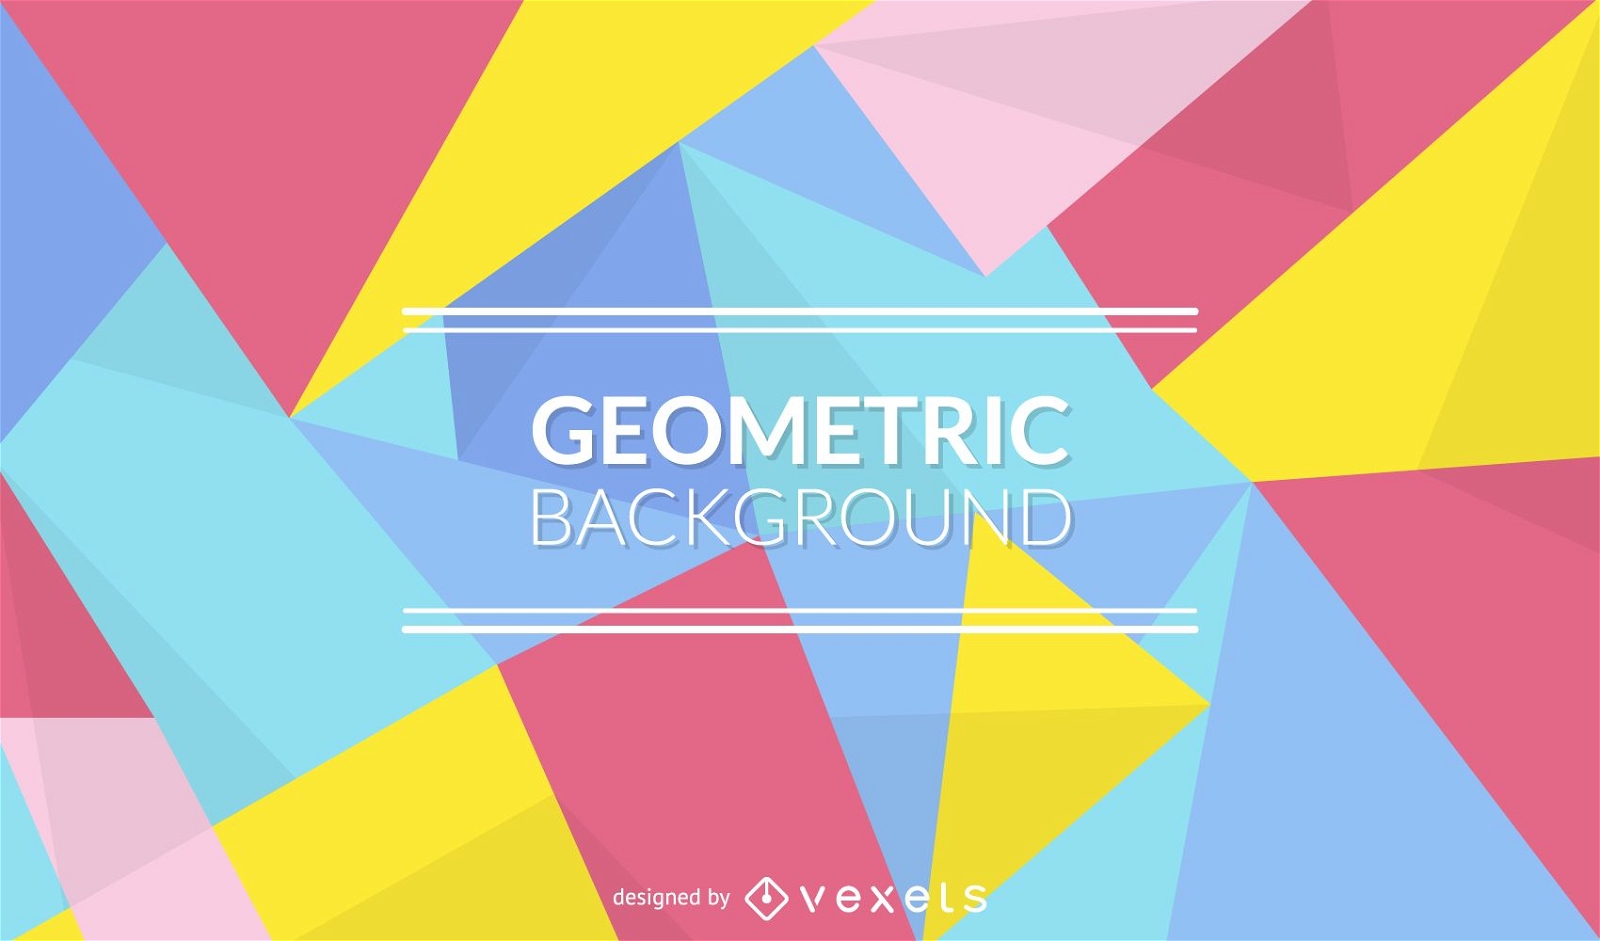 Geometric background design